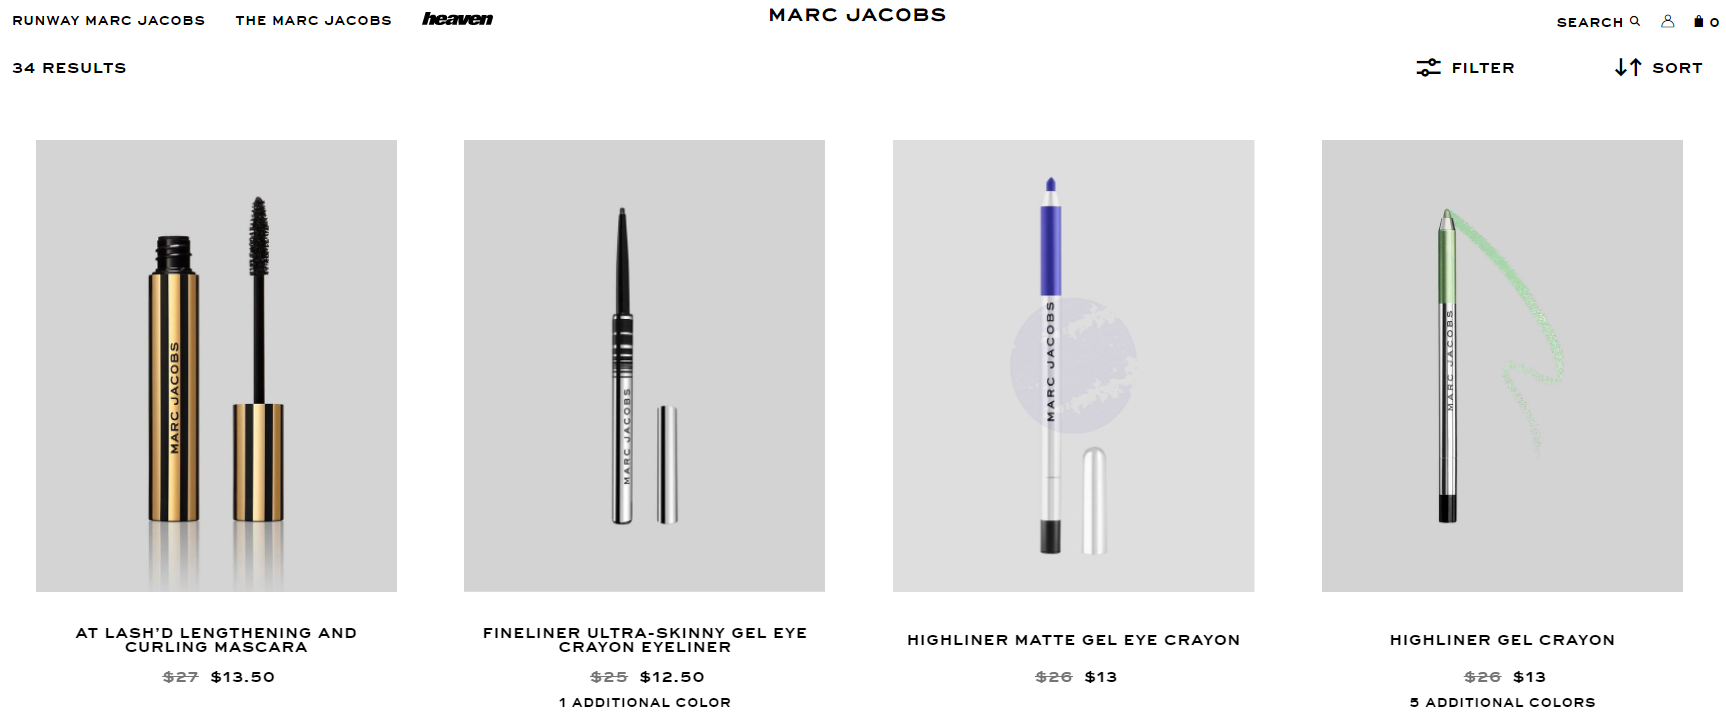 20211128173653 - Marc Jacobs Beauty Black Friday 2022